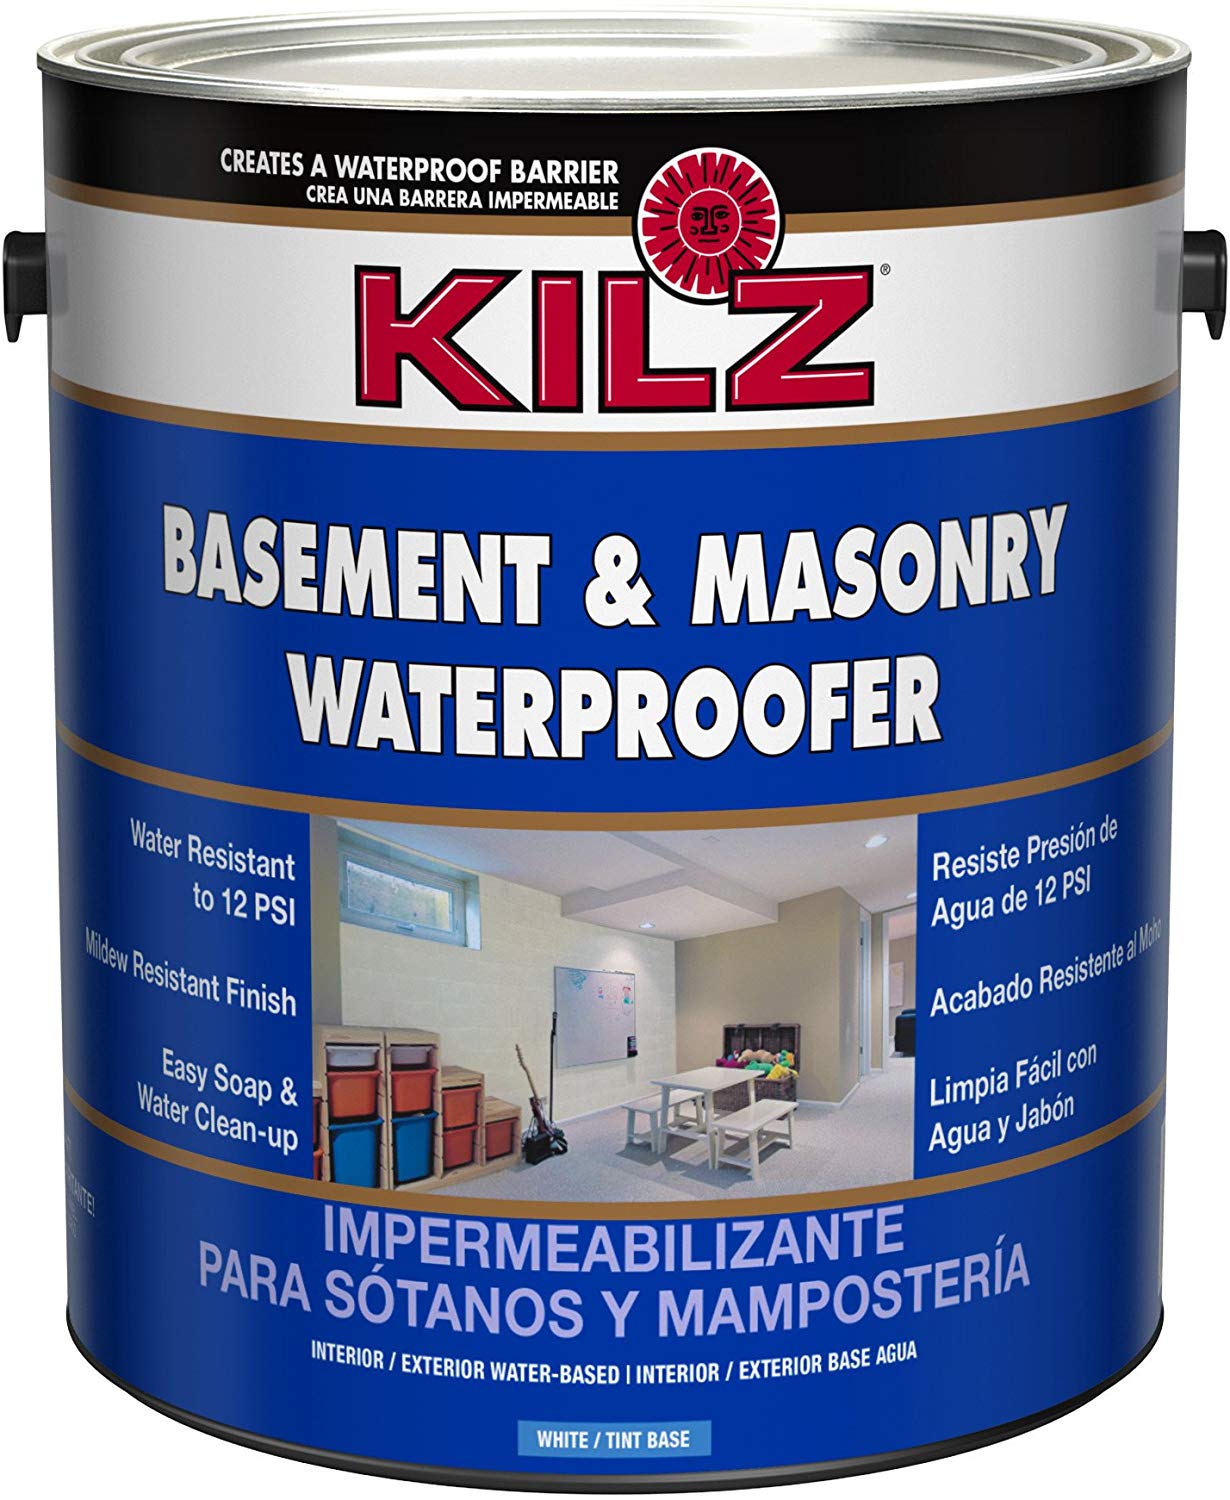 KILZ Interior/Exterior Basement and Masonry Waterproofing review